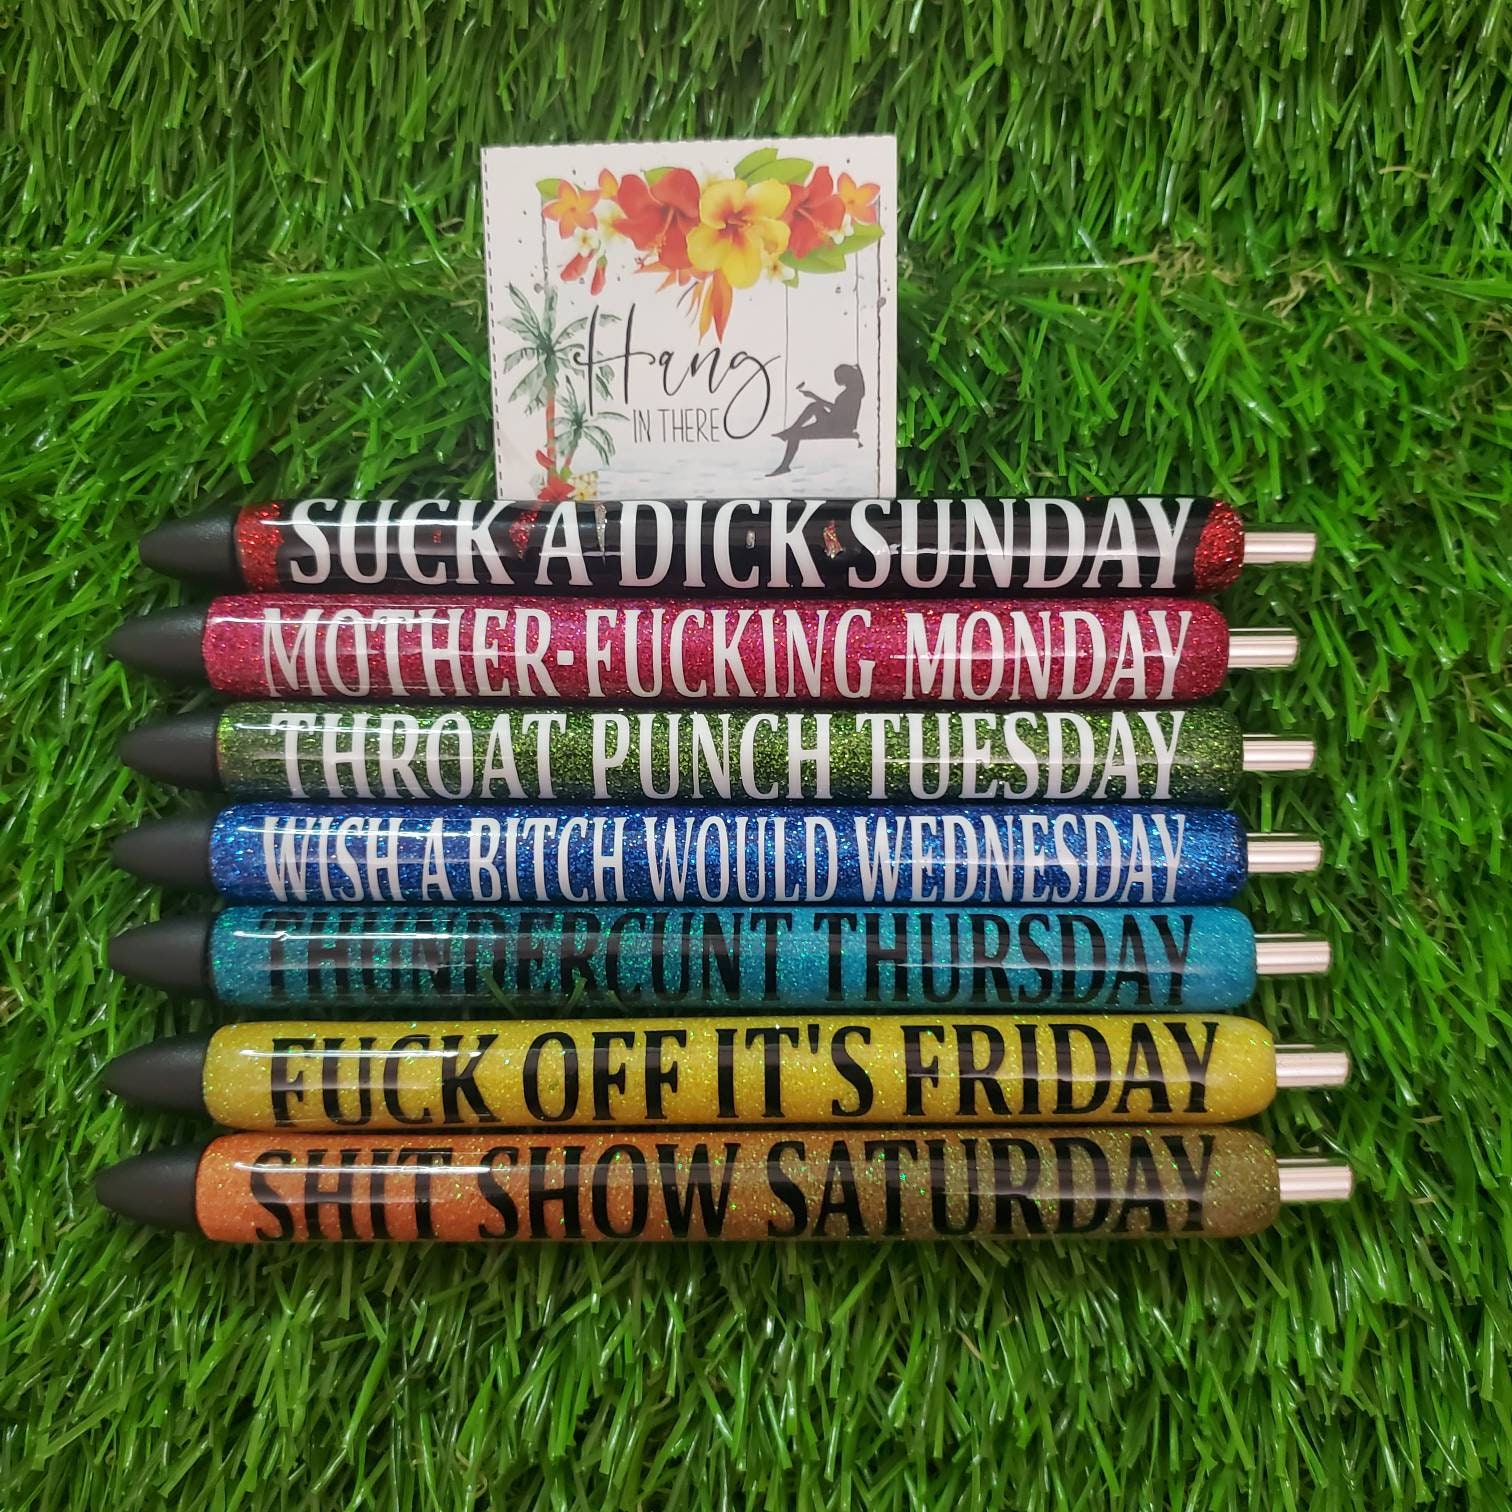 Vulgar Weekday Pen Set  Tututally Cute Custom Creations